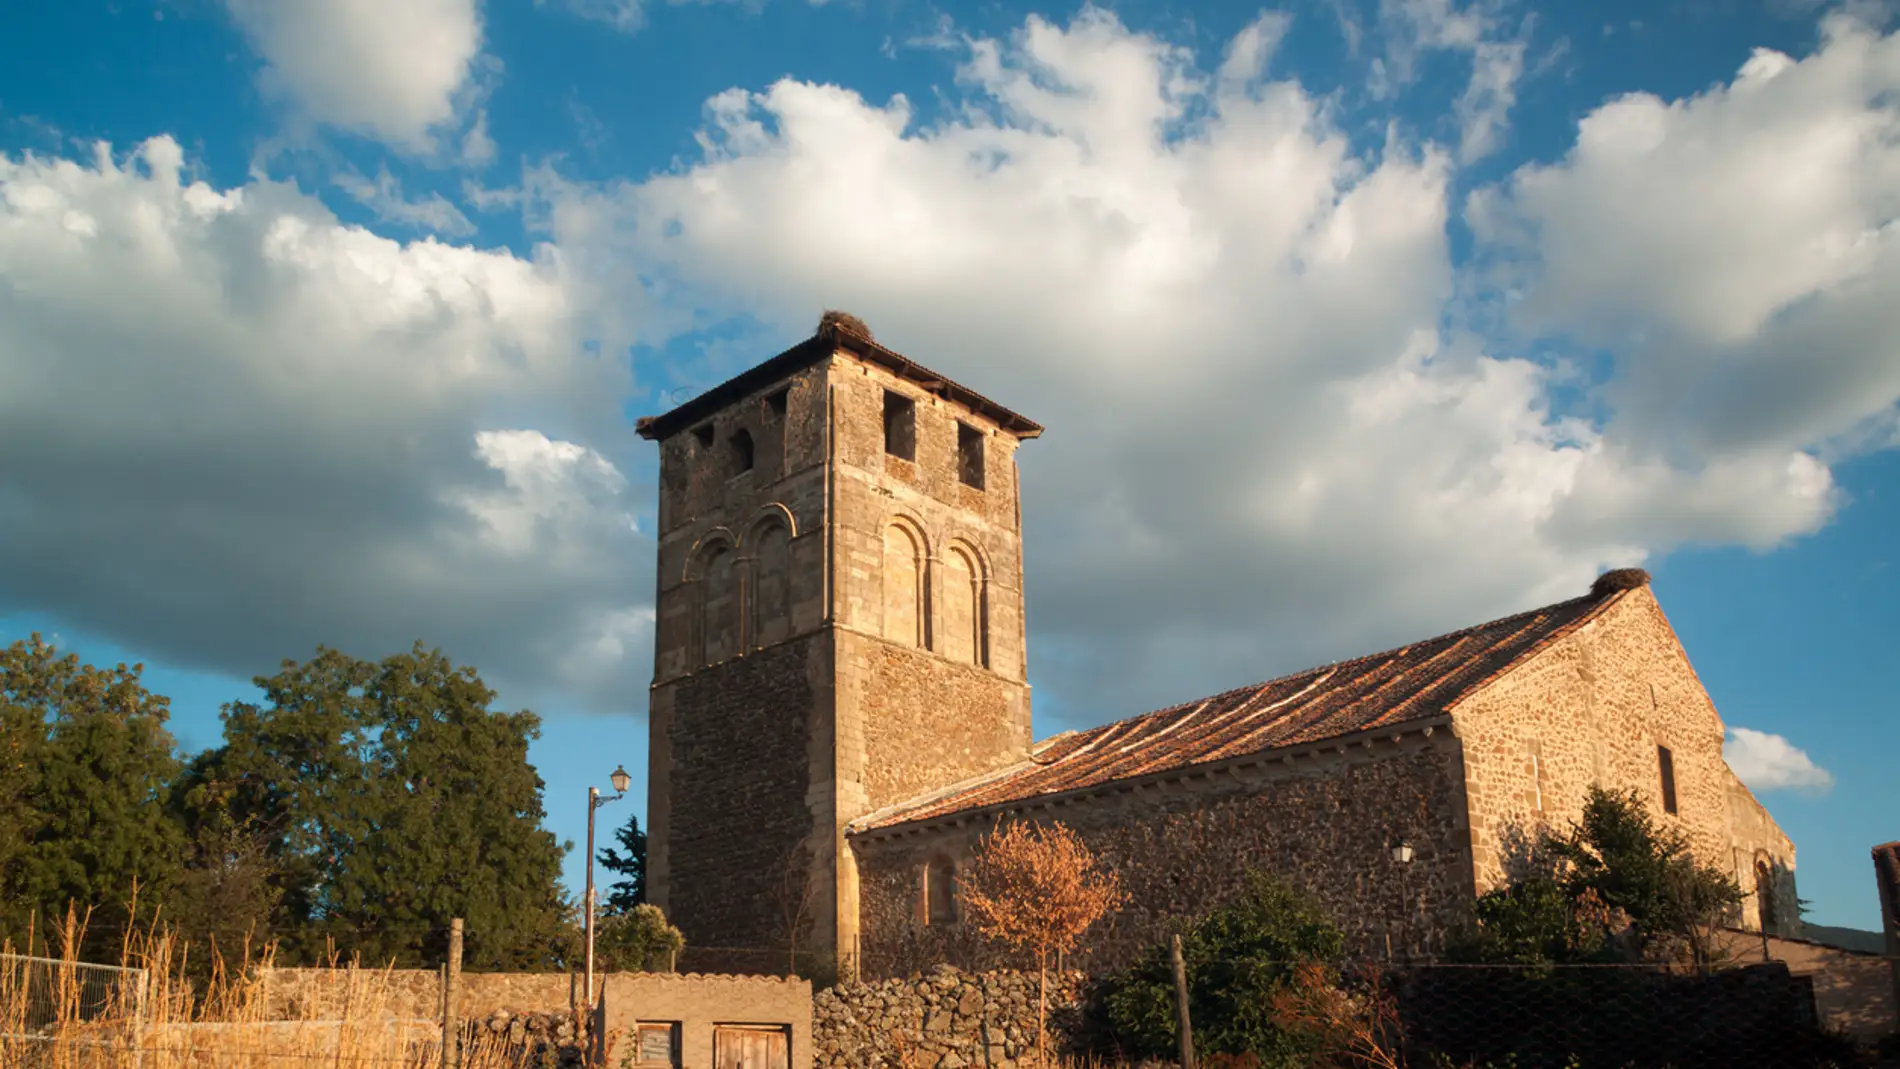 Iglesia románica de Sotosalbos, en un pueblo de Segovia